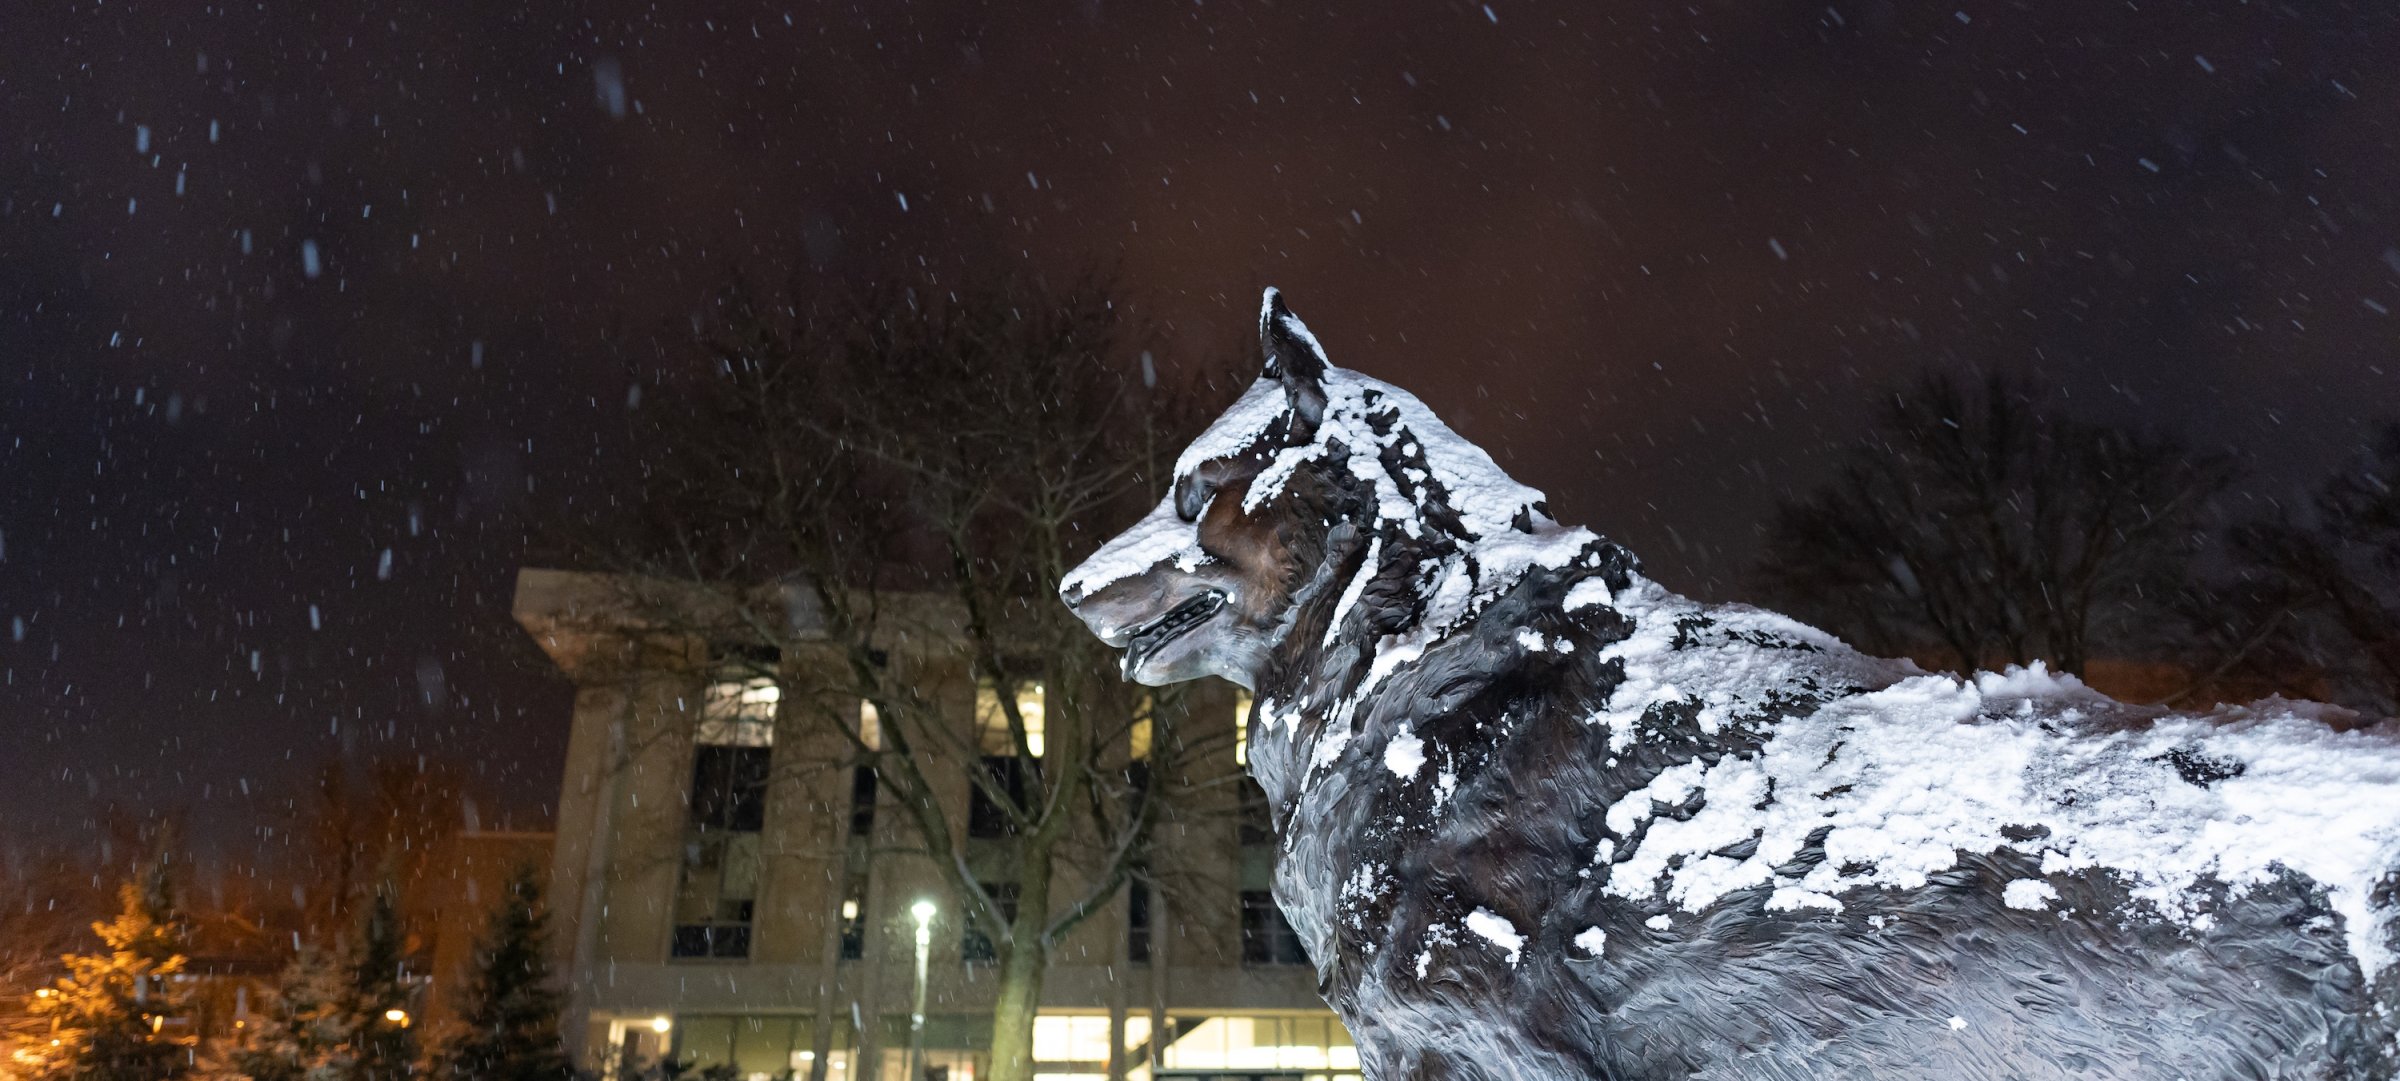 Husky Statue at night in winter.